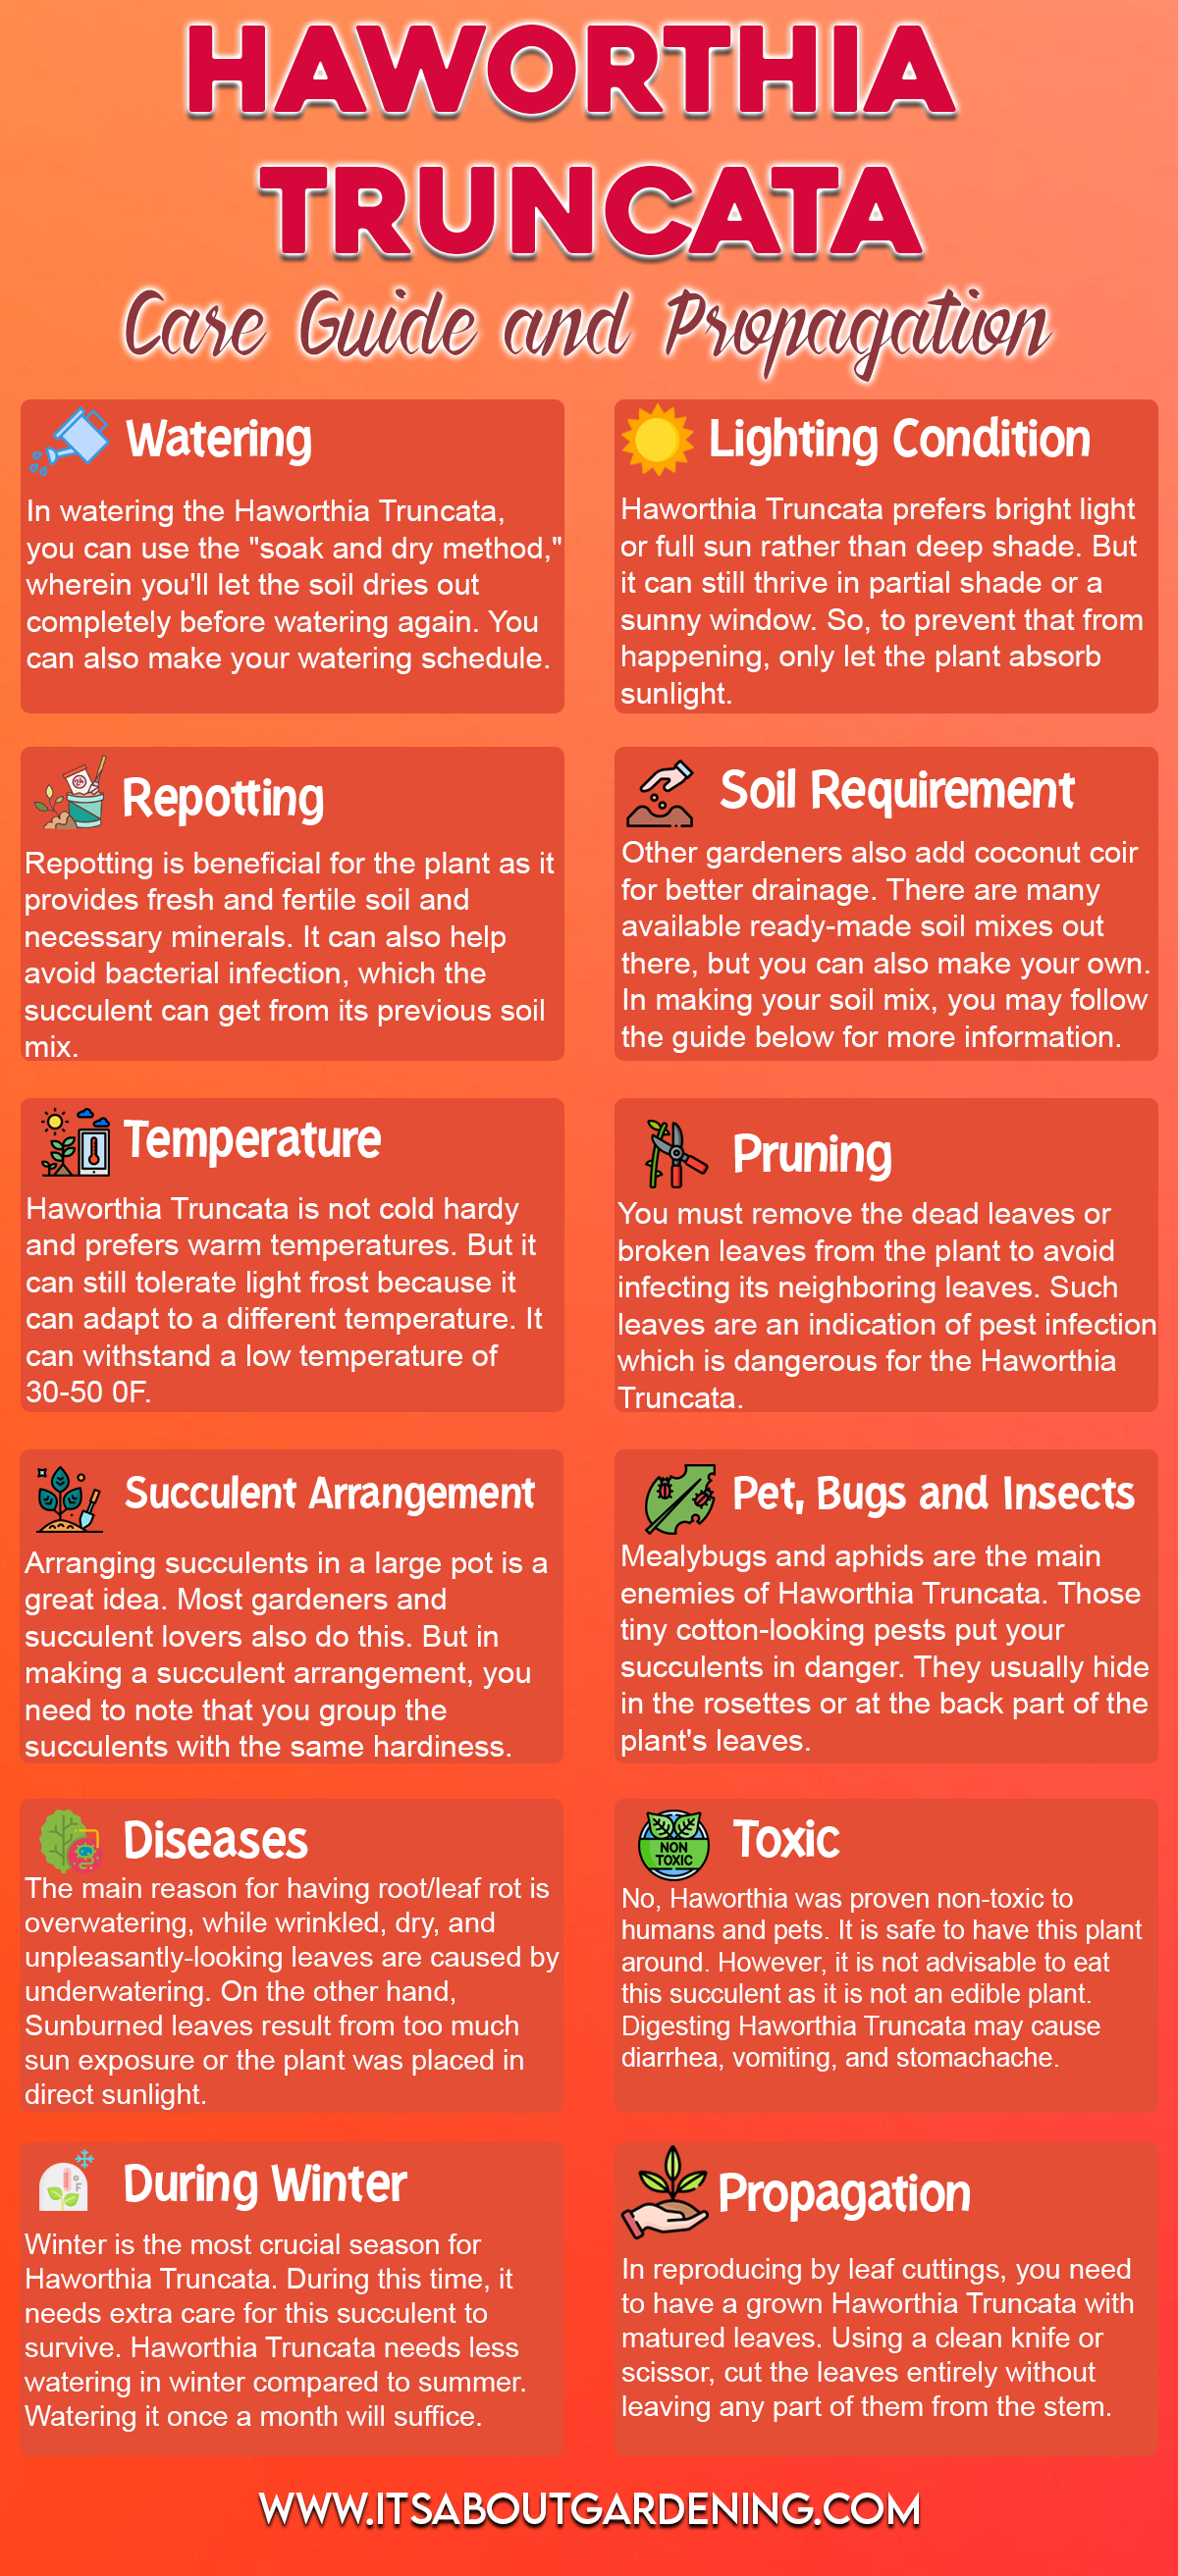 Haworthia Truncata Care Guide and Propagation Infographic